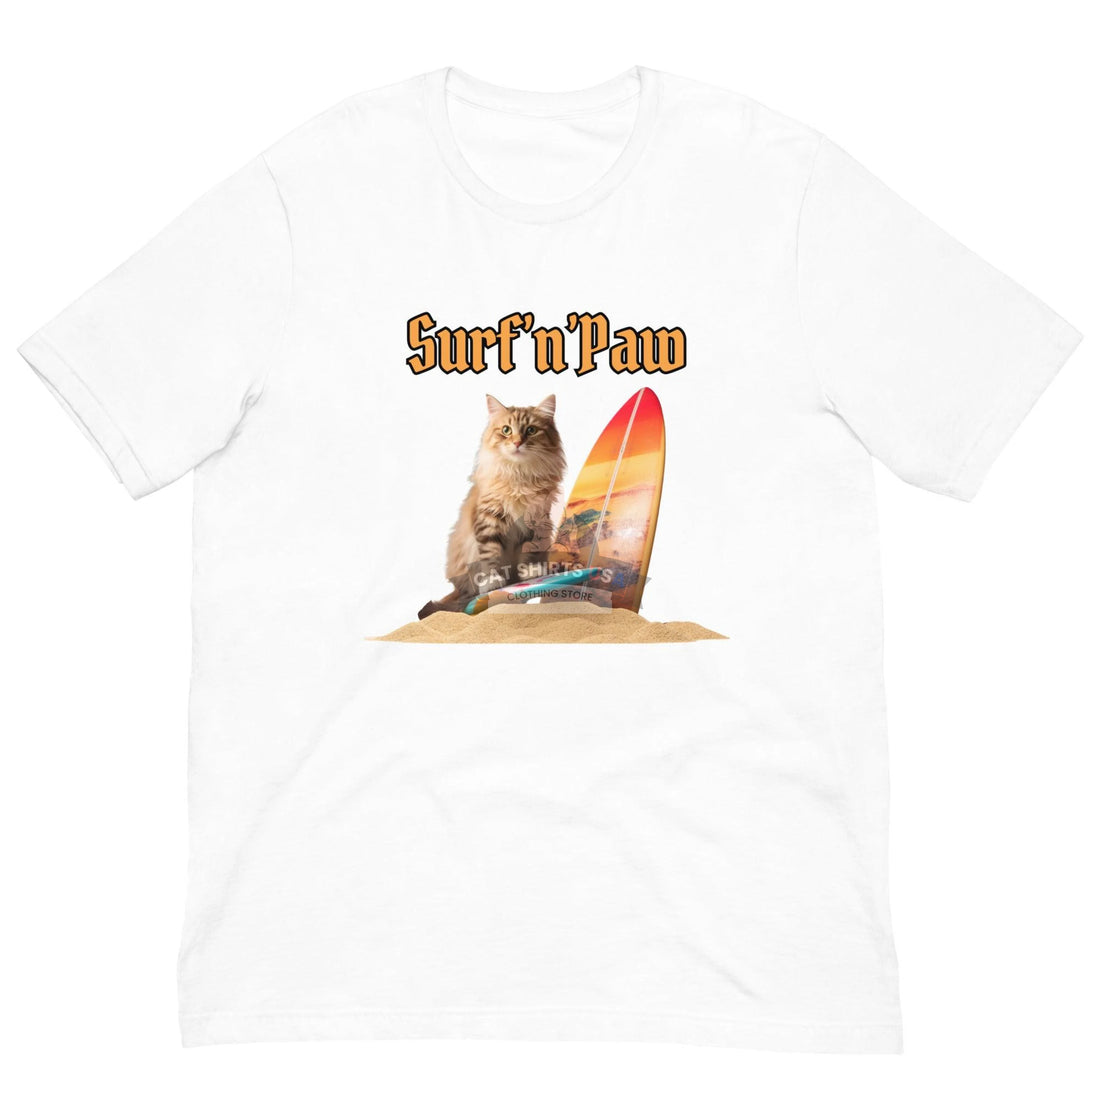 Surf'n'Paw Cat Shirt - Cat Shirts USA